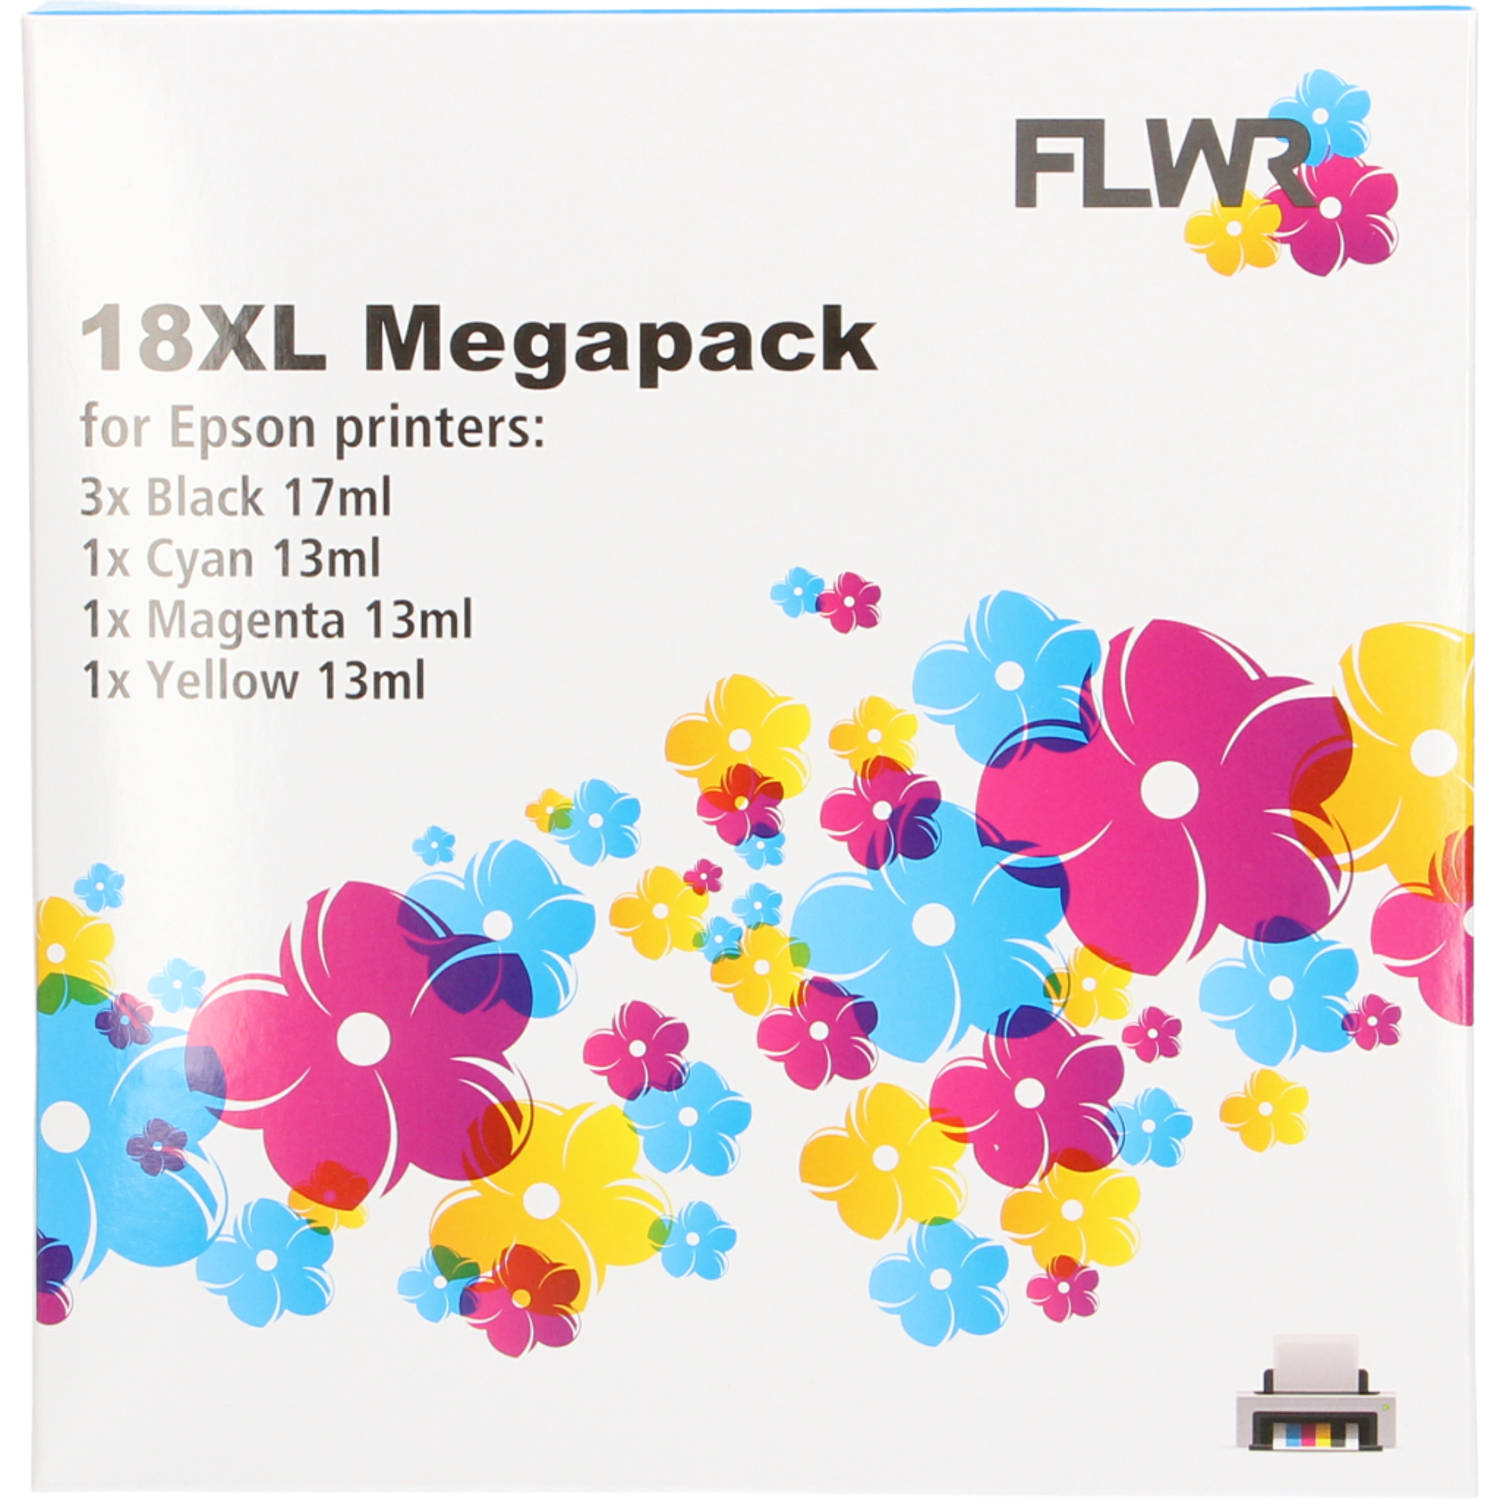 FLWR Epson T1811/2/3/4 Megapack cartridge